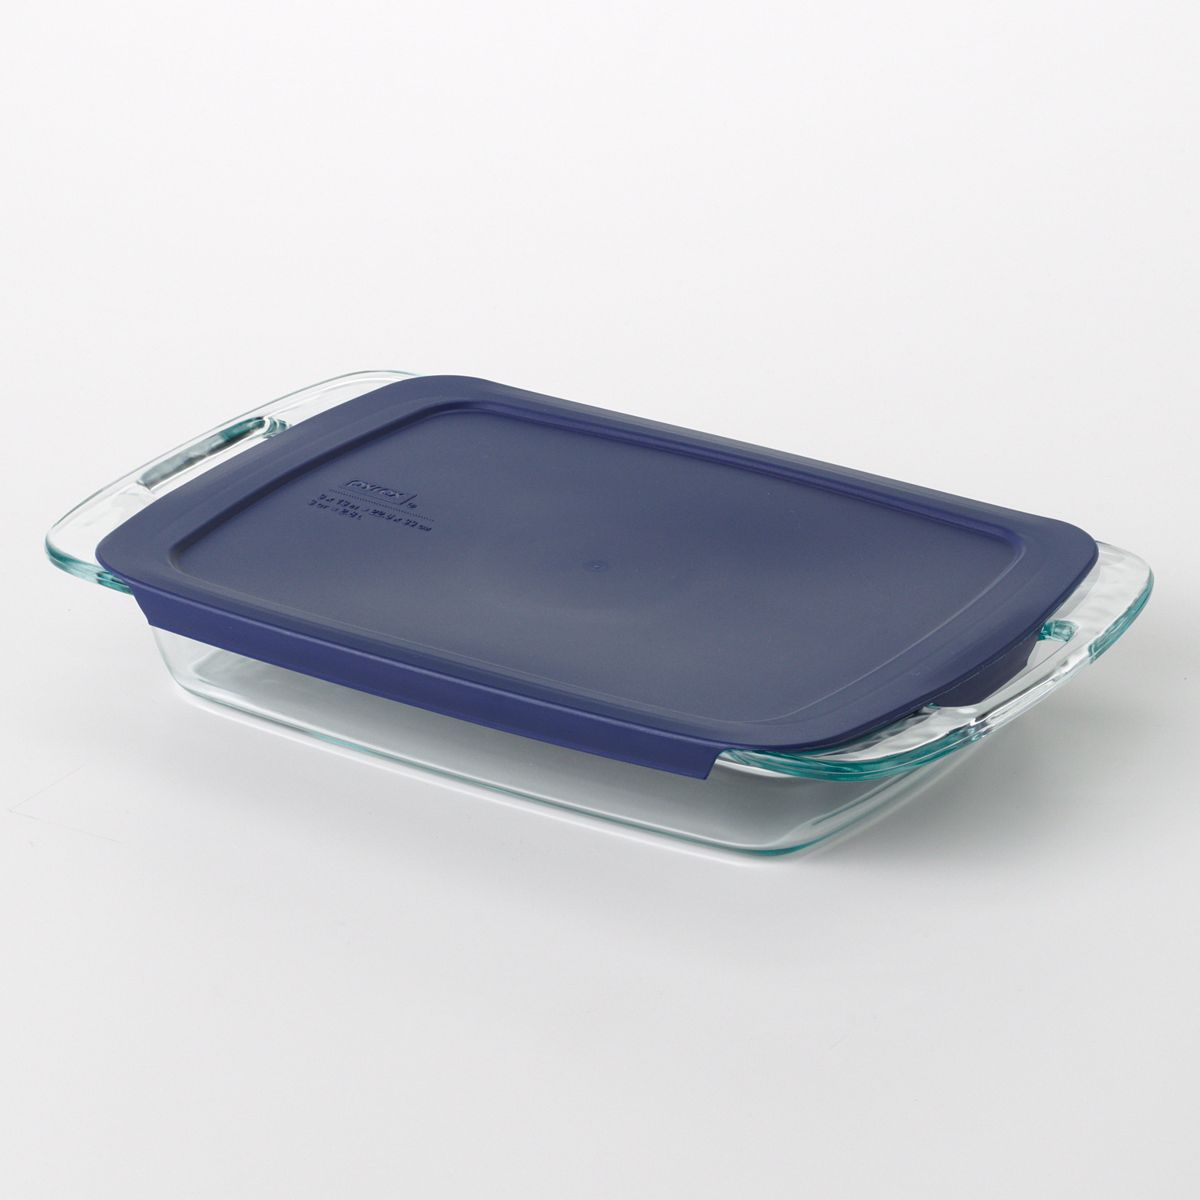 Pyrex® 3-quart, 9 X 13 Glass Baking Dish with Blue Lid - Larry